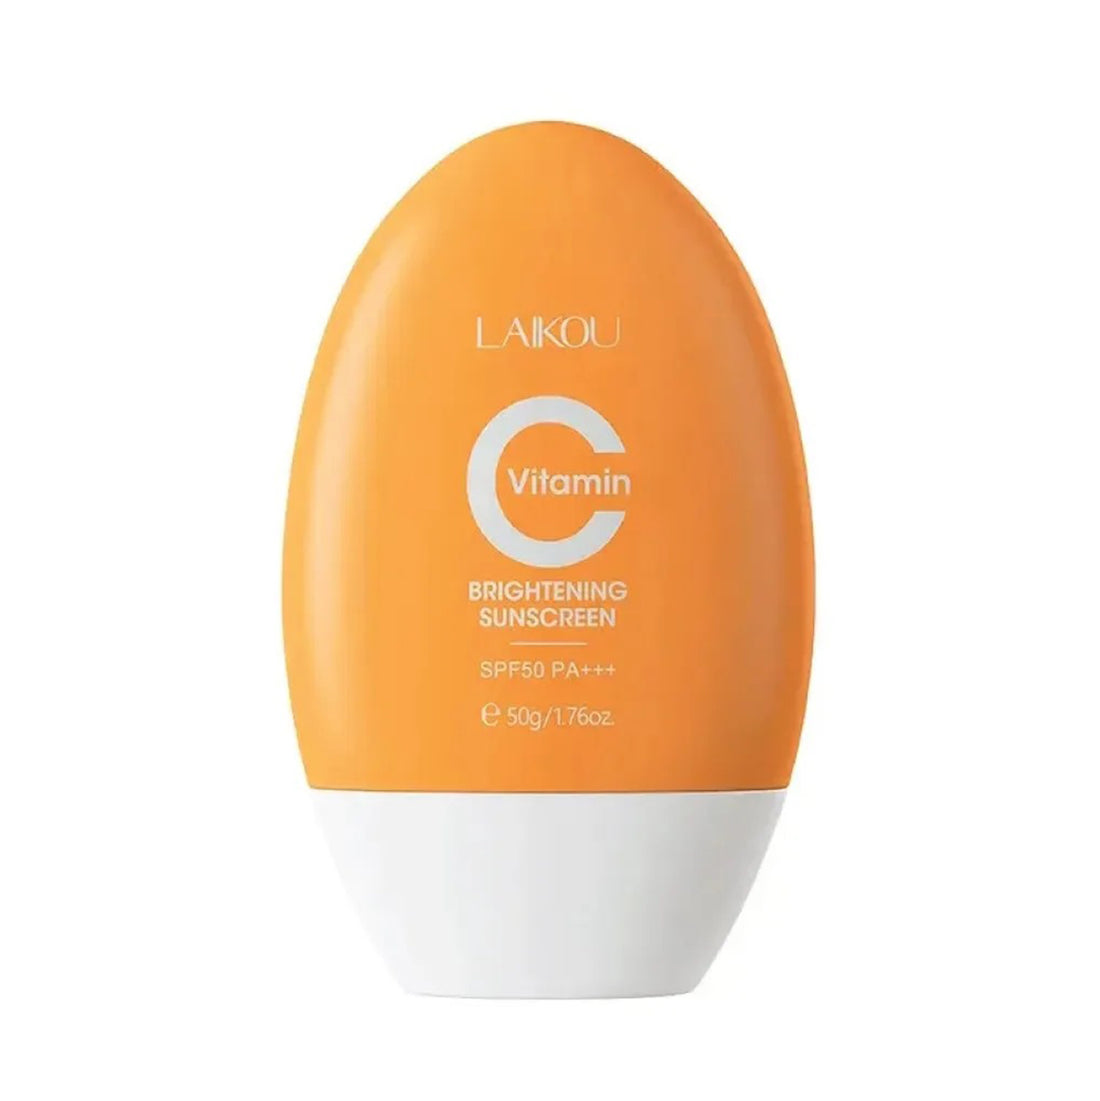 Laikou Vitamin C Brightening Sunscreen SPF 50 PA+++ (50gm)